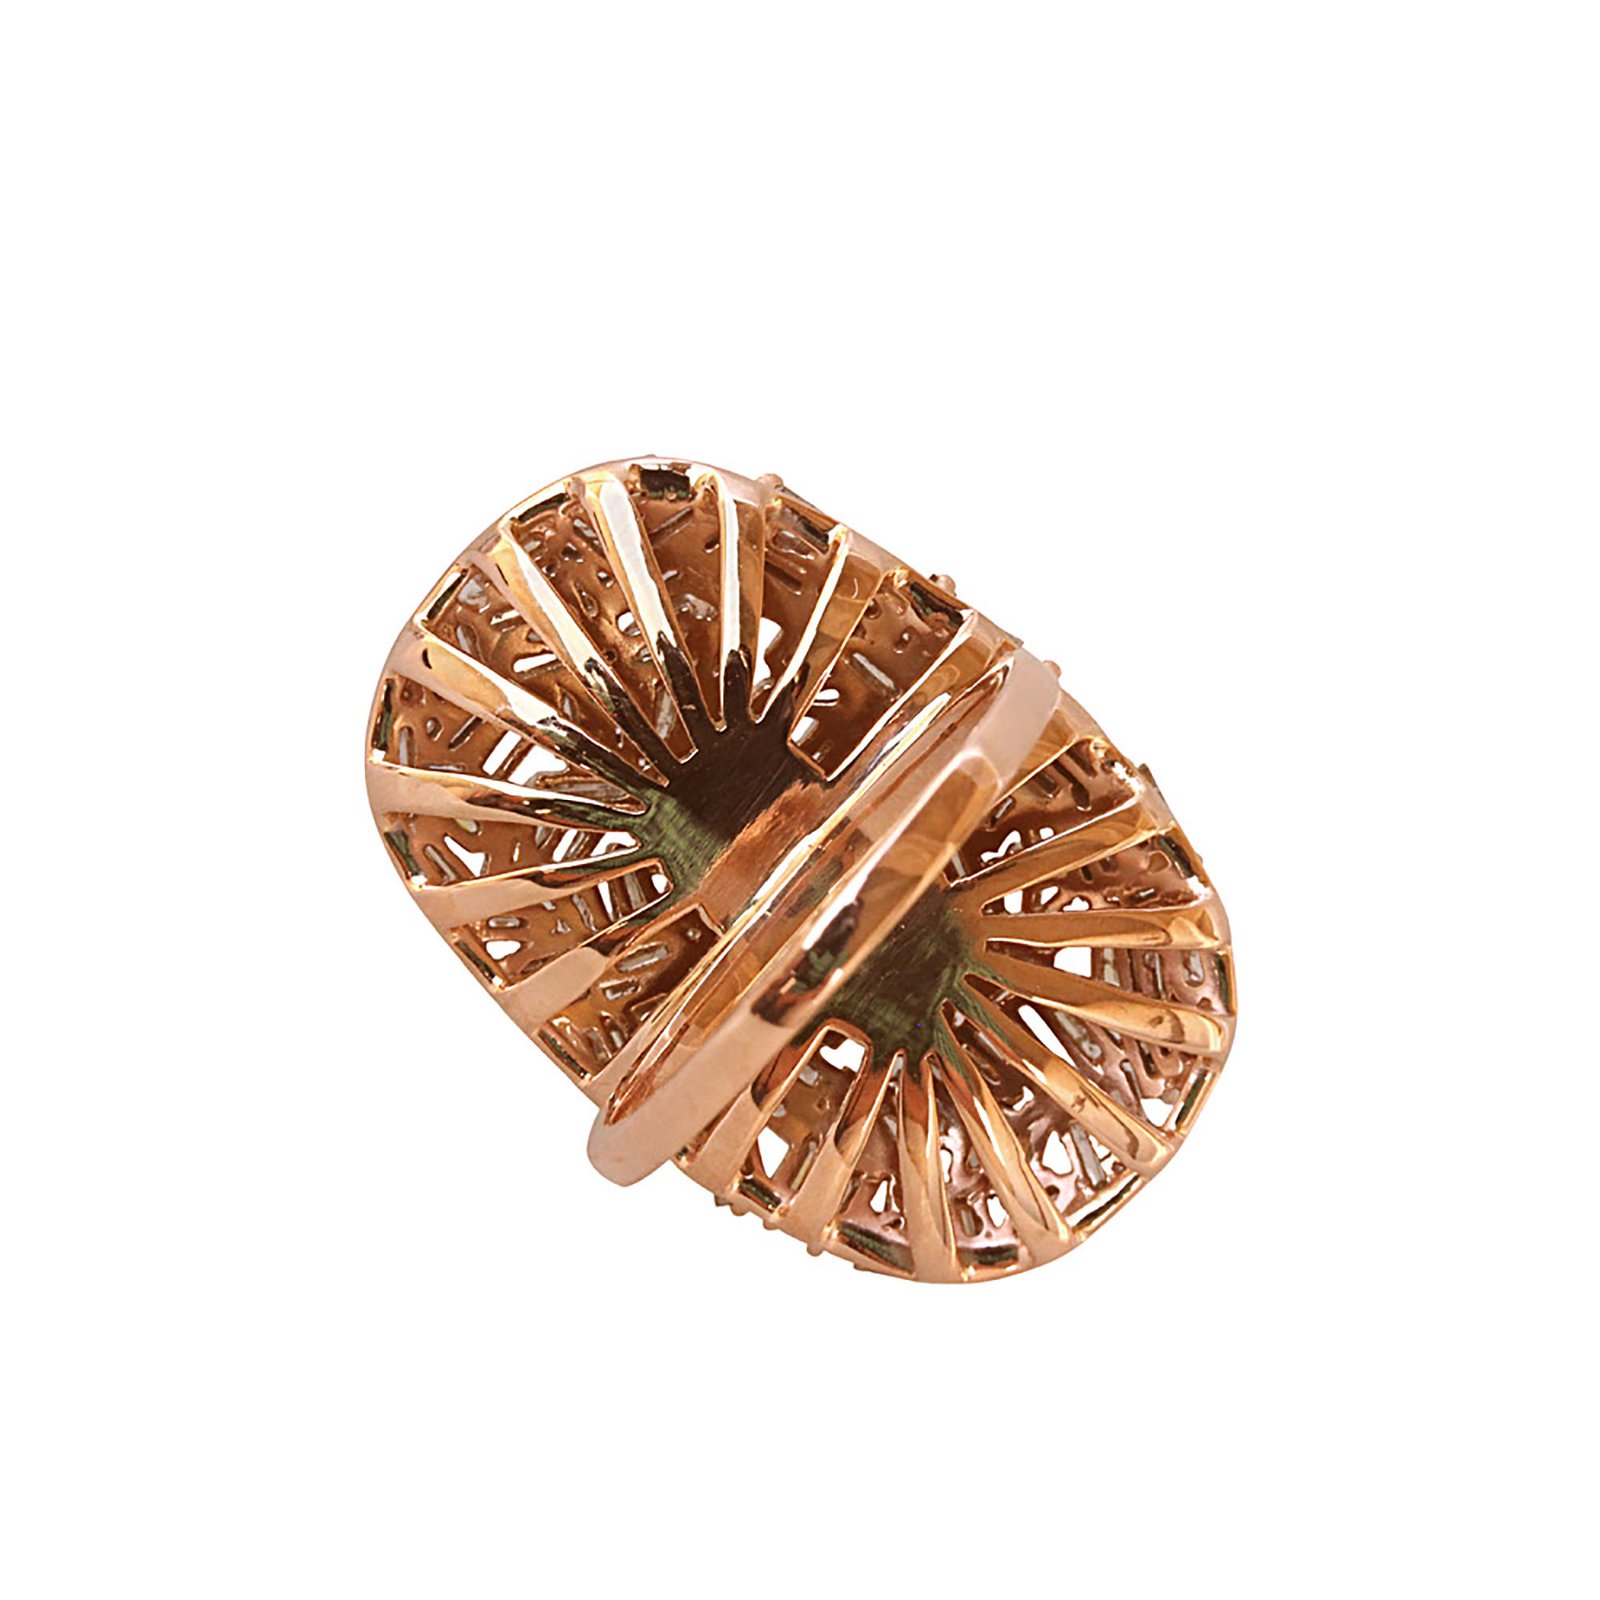 Solid 18k rose gold oval shape baguette diamond ring